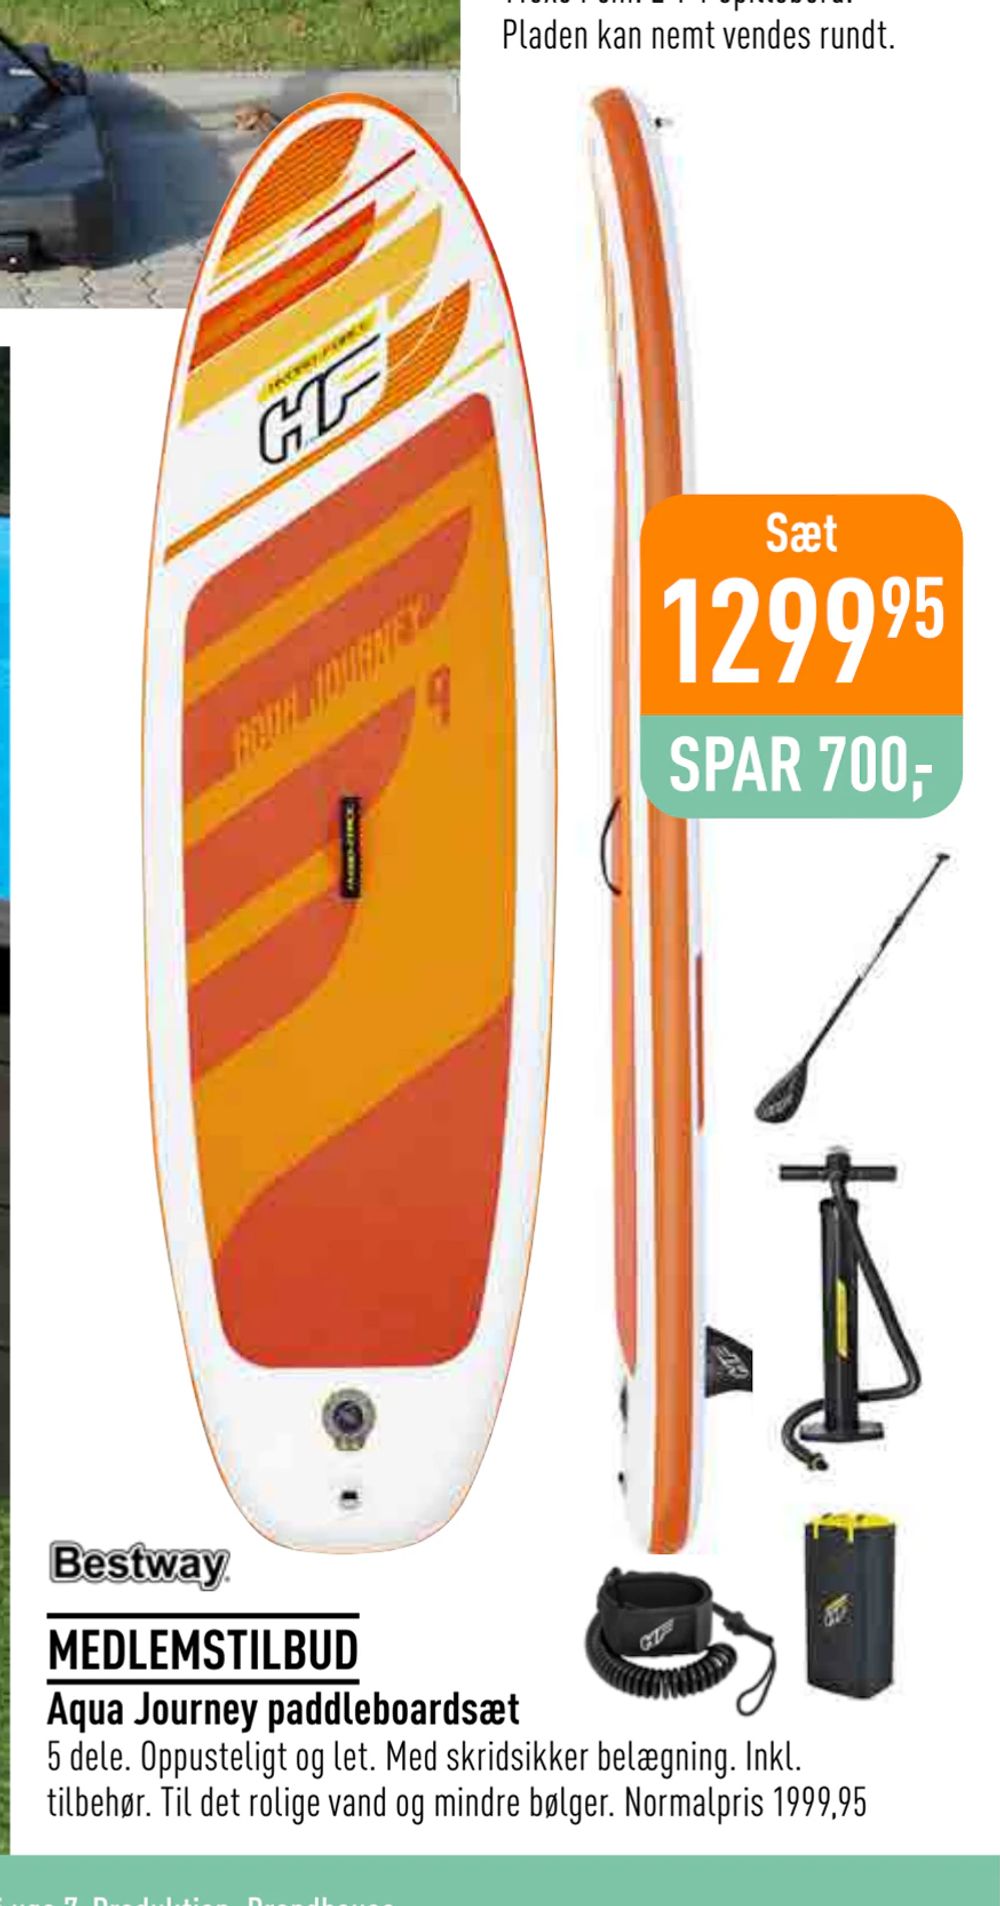 Tilbud på Aqua Journey paddleboardsæt fra Imerco til 1.299,95 kr.